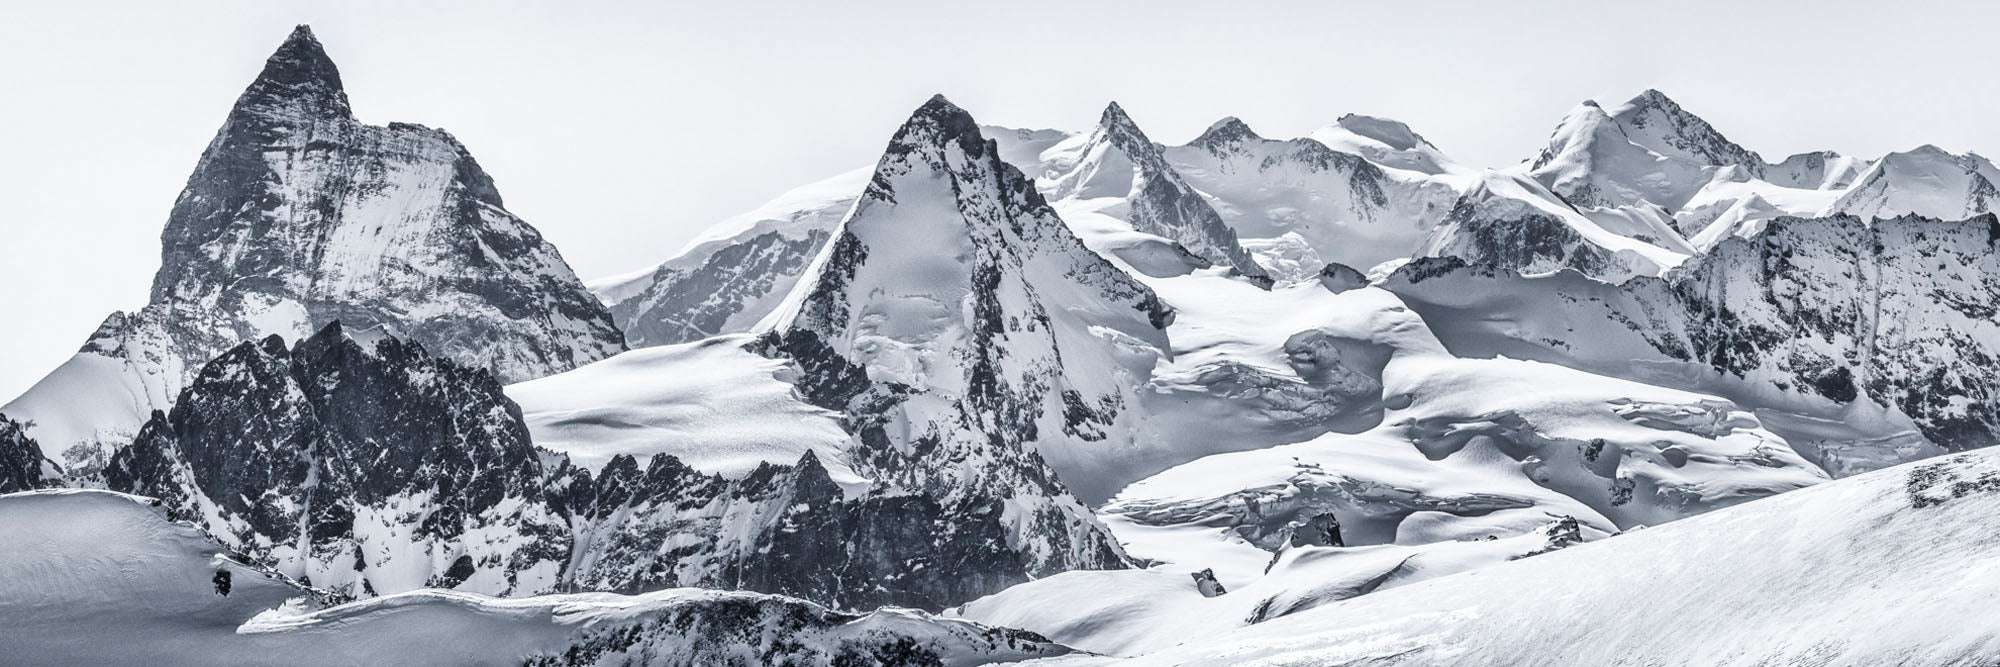 Valais Alps, Panorama, Switzerland (DSC8900).